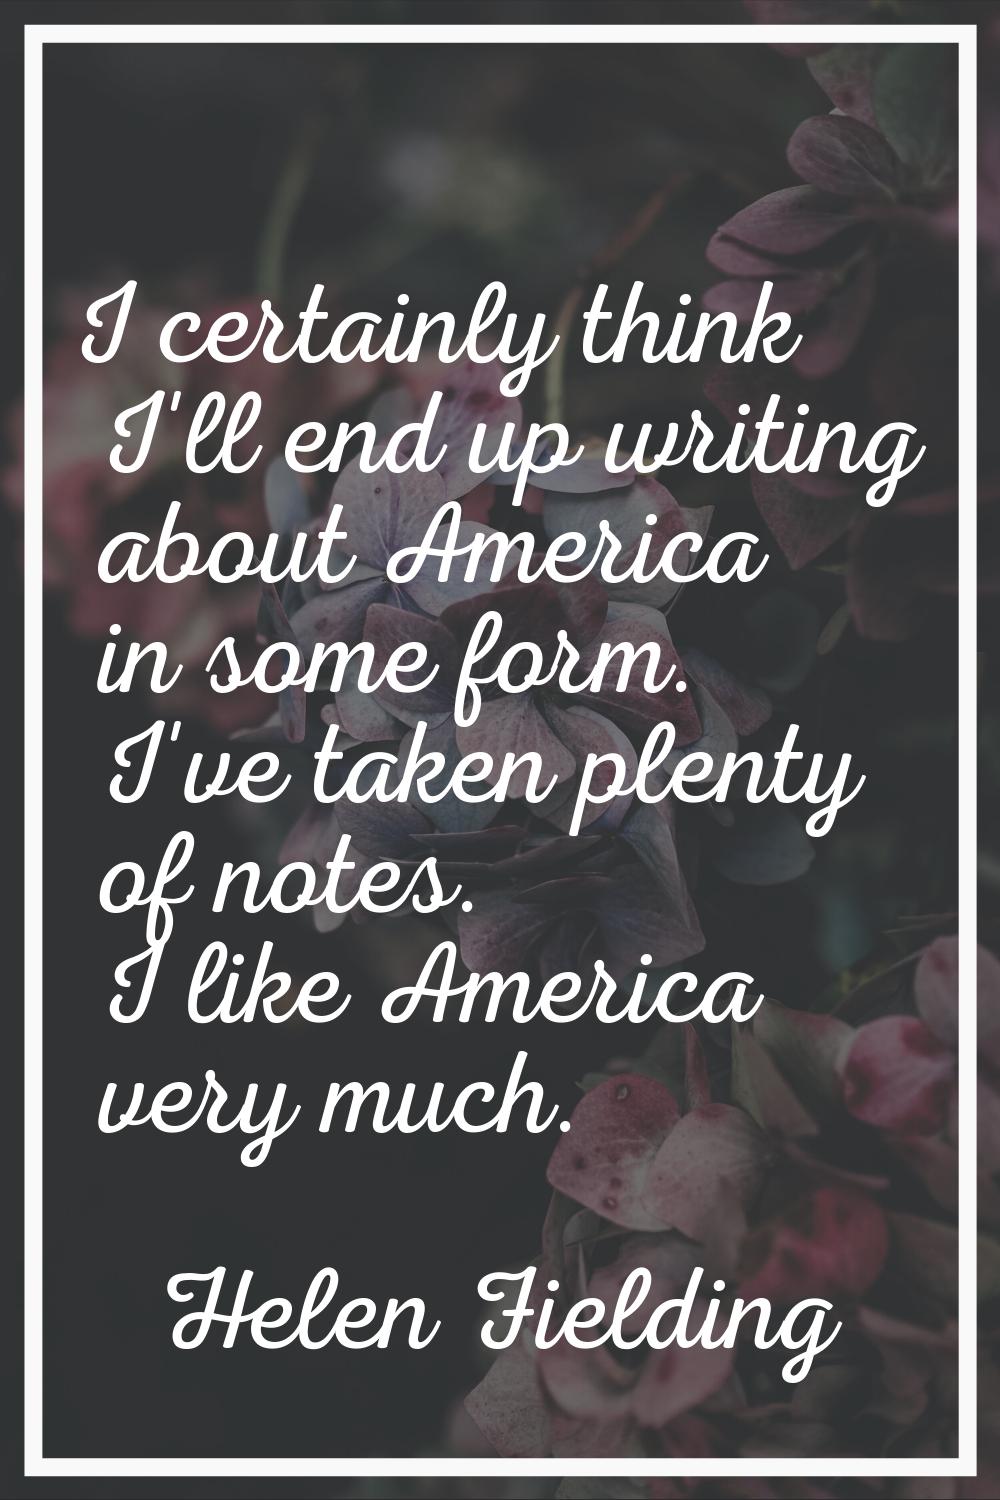 I certainly think I'll end up writing about America in some form. I've taken plenty of notes. I lik